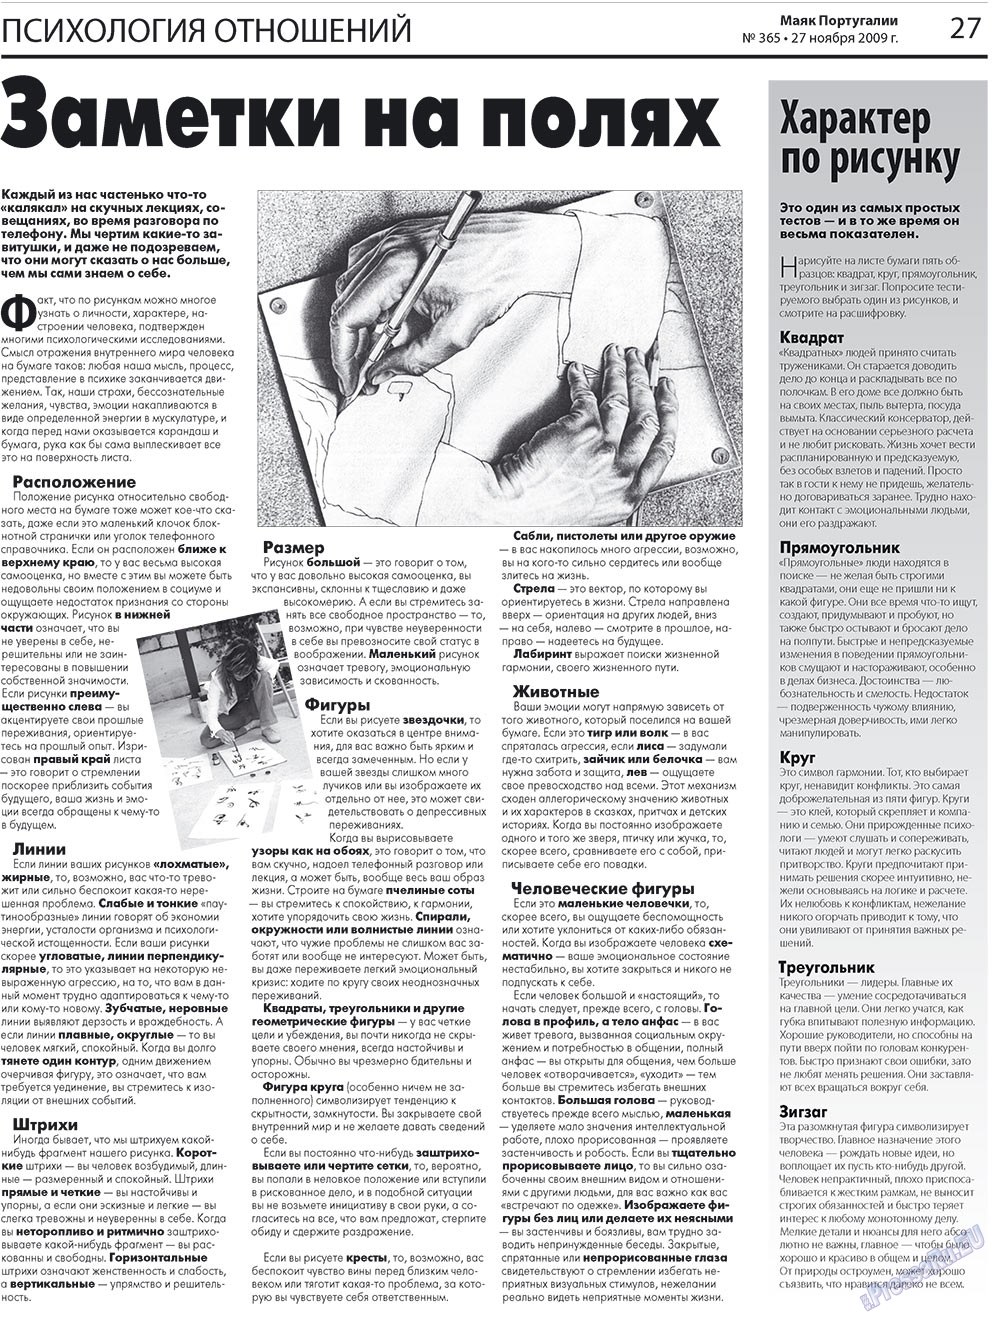 Маяк Португалии, газета. 2009 №47 стр.27